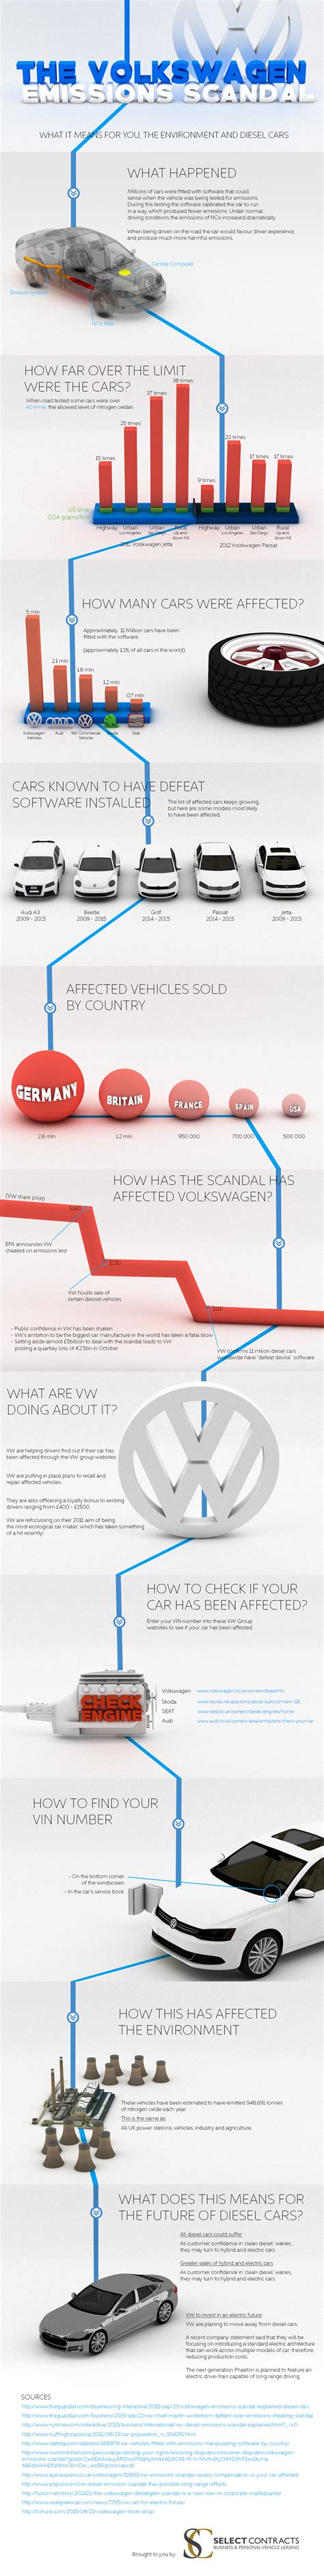 Volkswagen Emissions Scandal Dateline [Infographic] - The Fast Lane Car